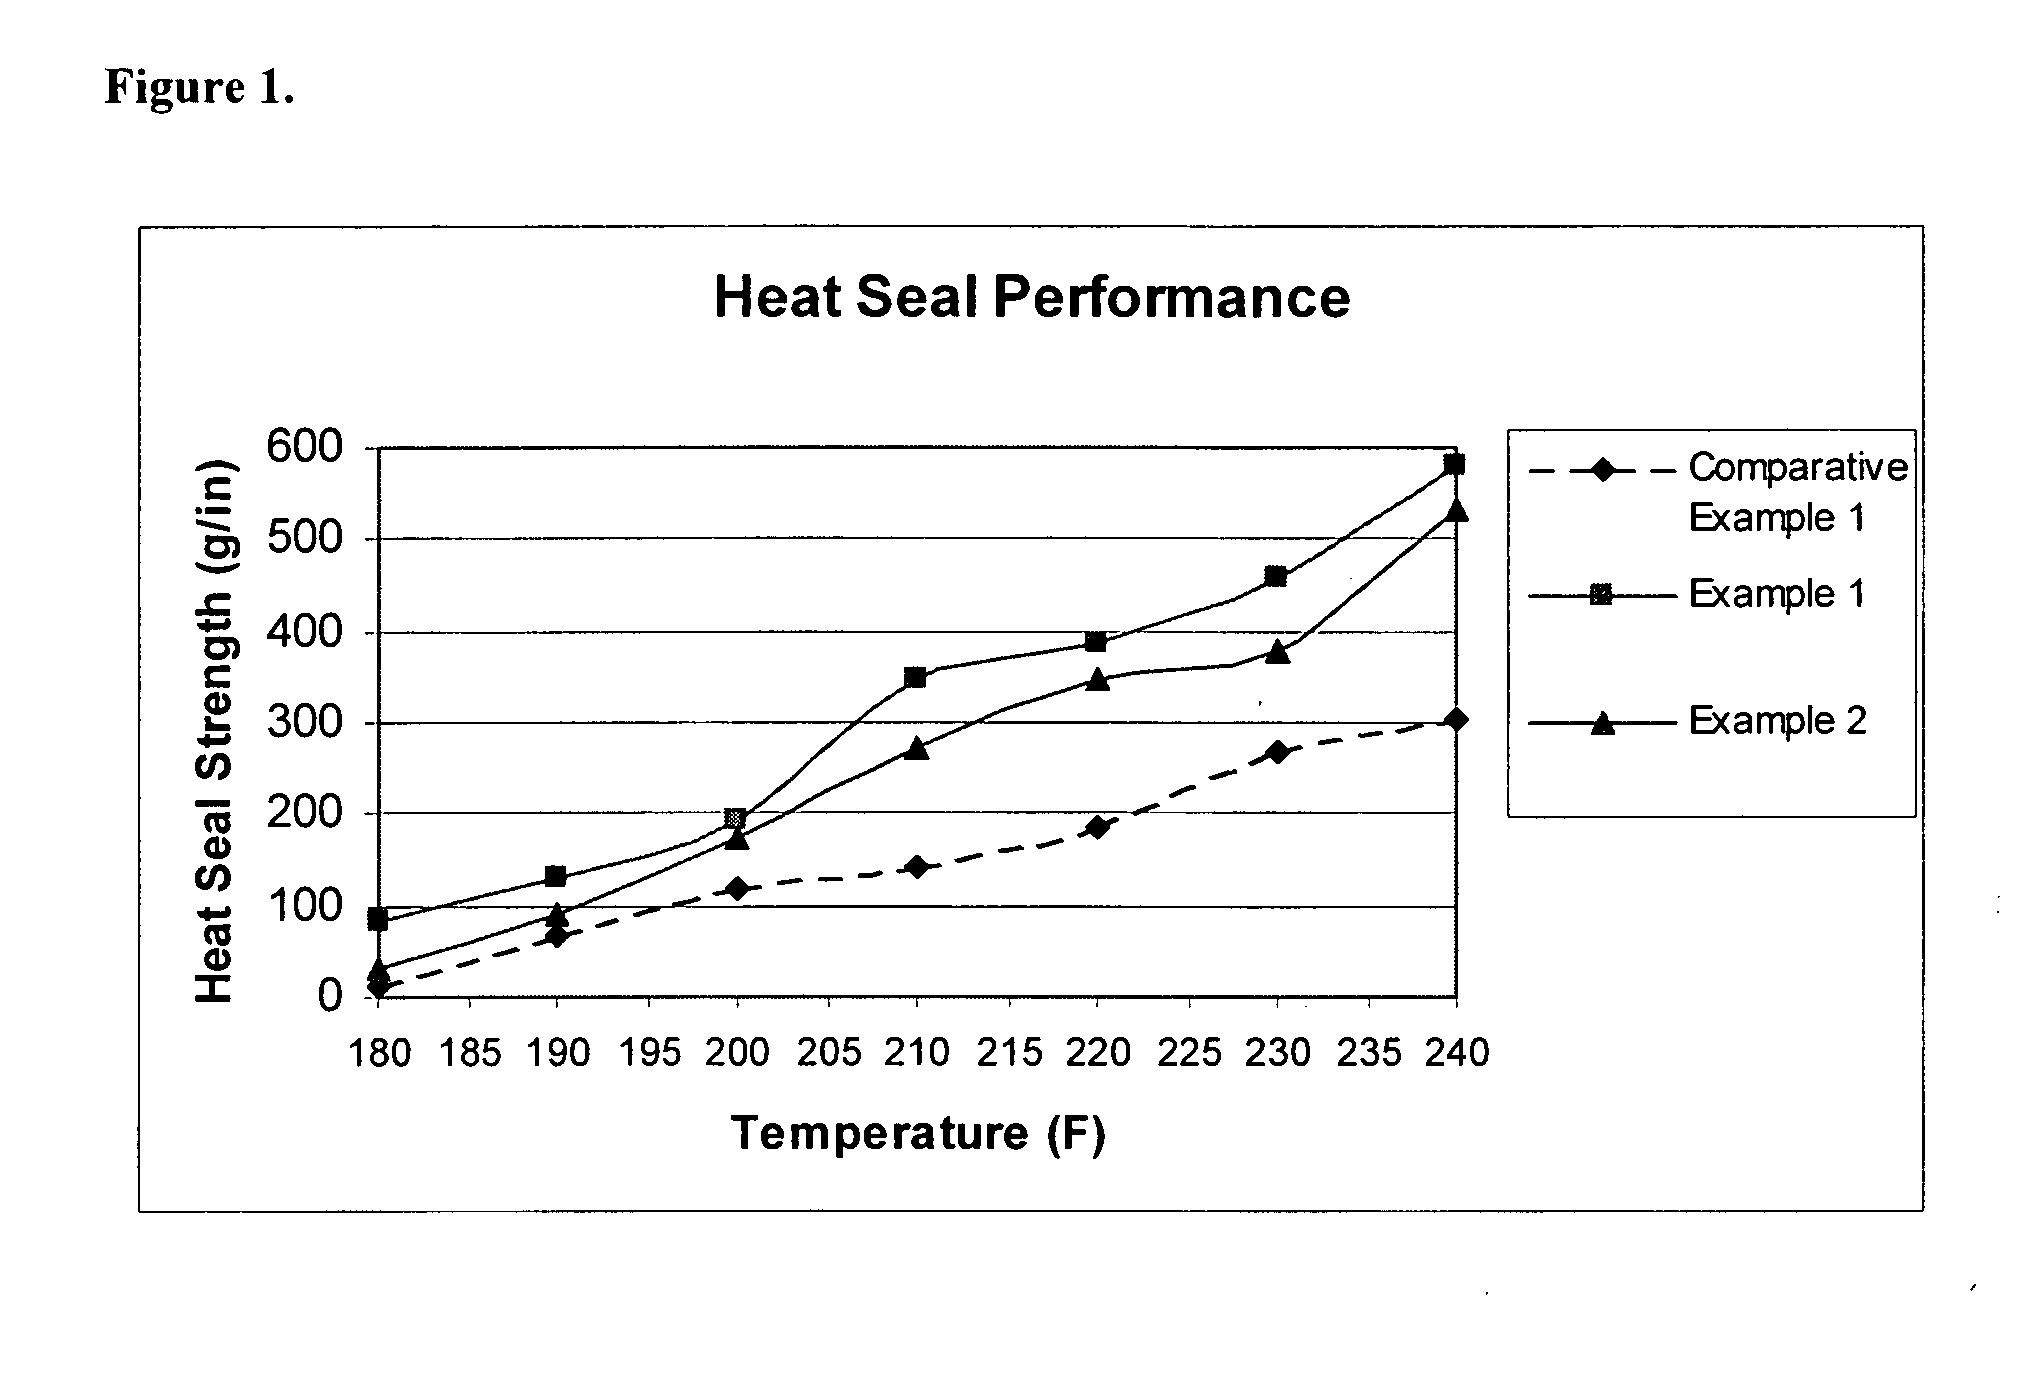 Heat sealable biaxially oriented polypropylene film